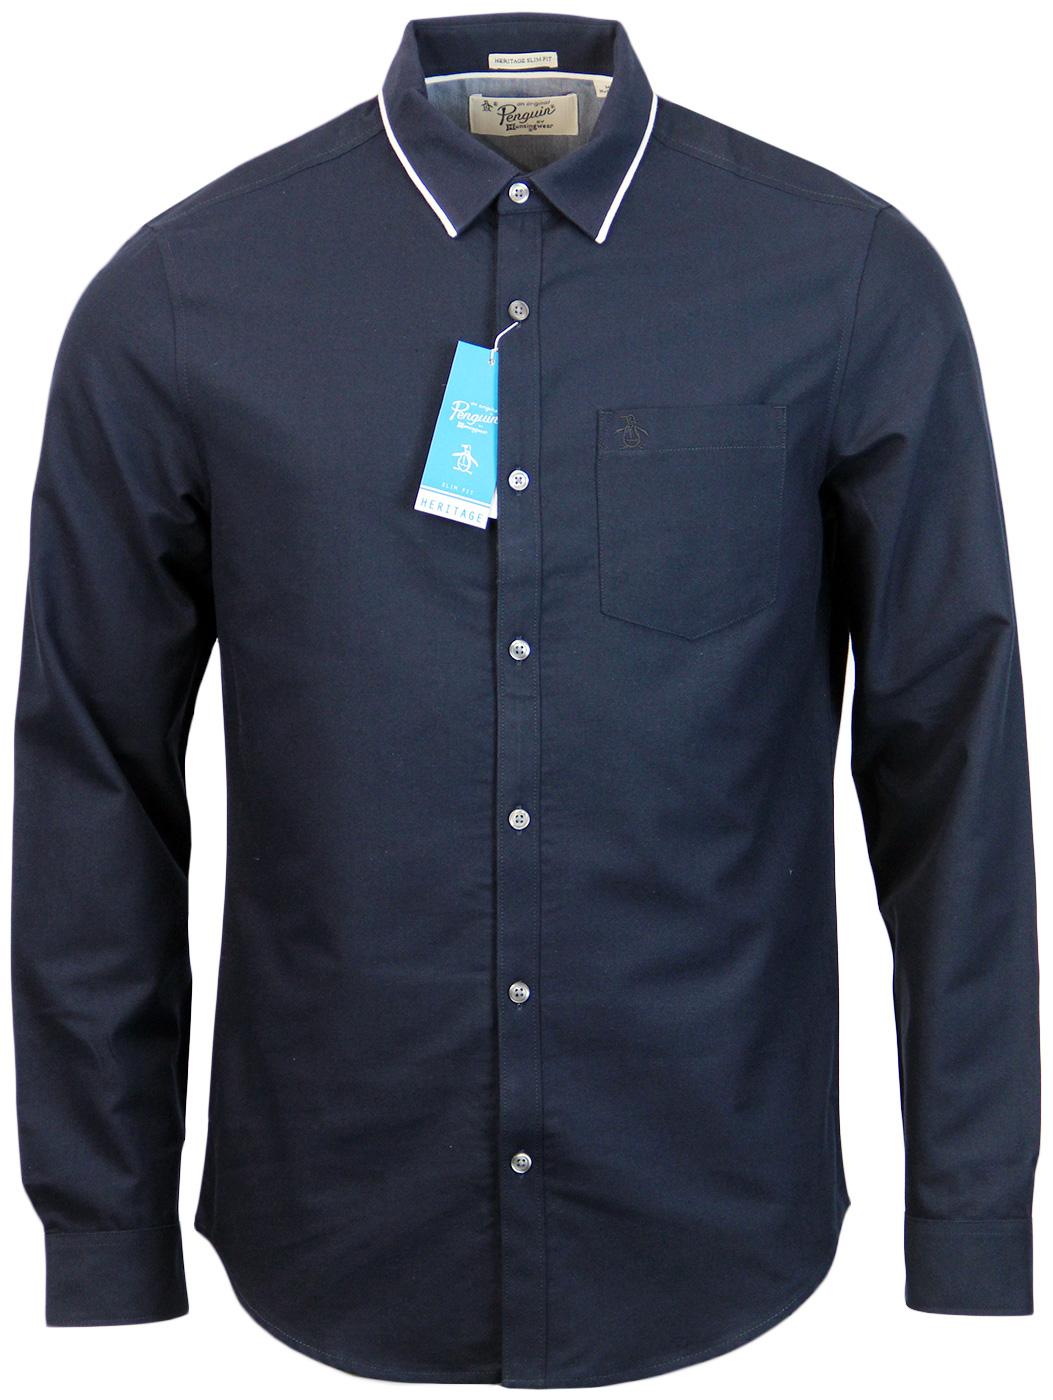 Drive ORIGINAL PENGUIN Earl Collar Oxford Shirt